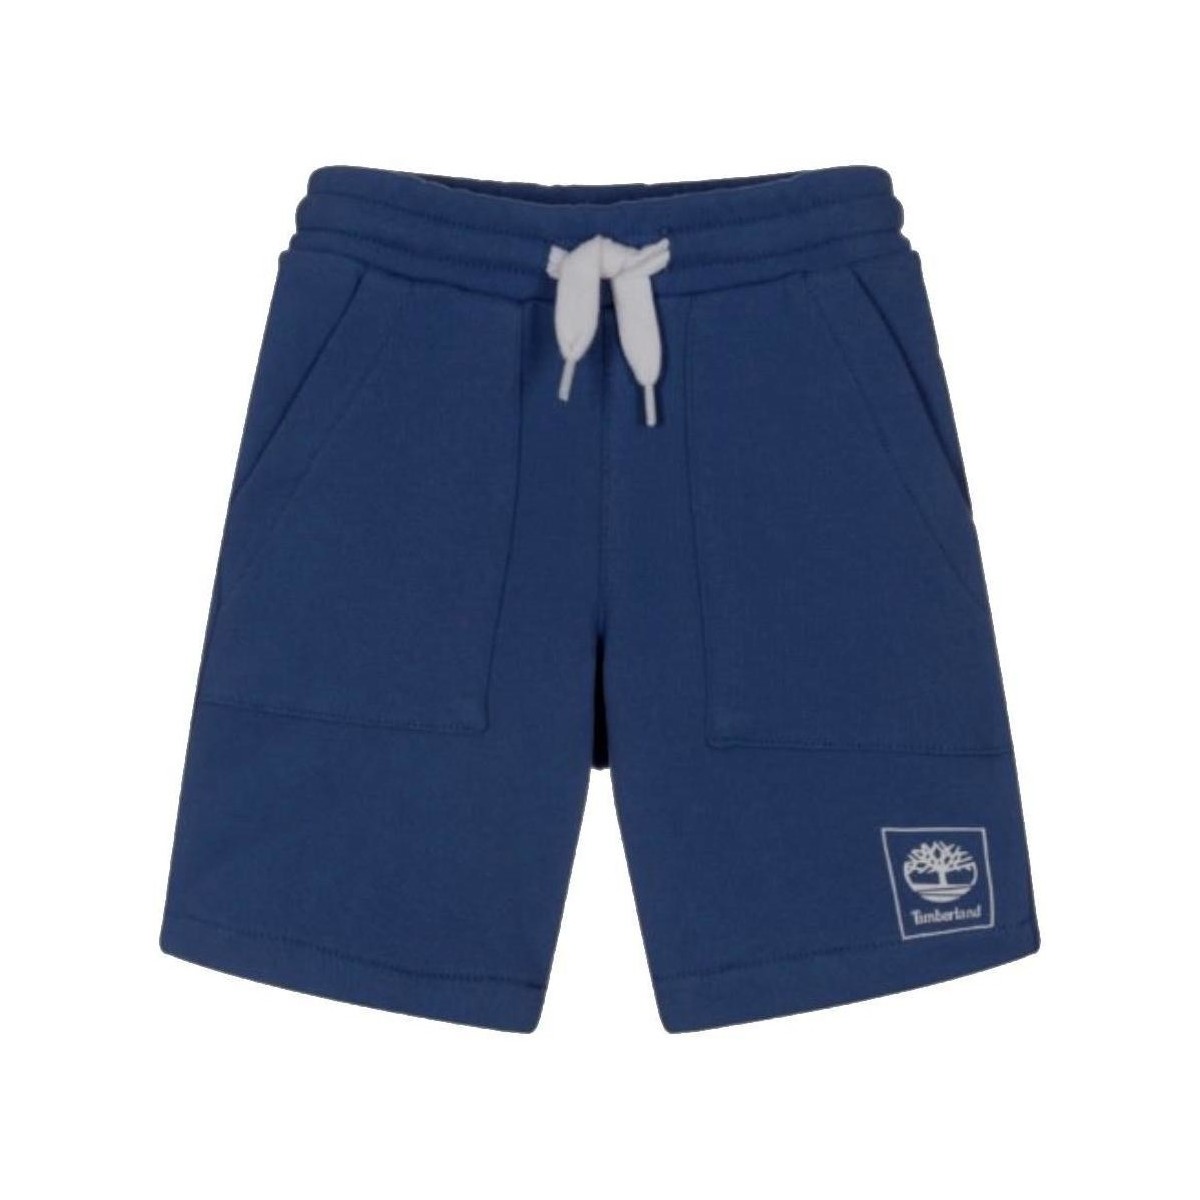 textil Pojkar Shorts / Bermudas Timberland  Blå